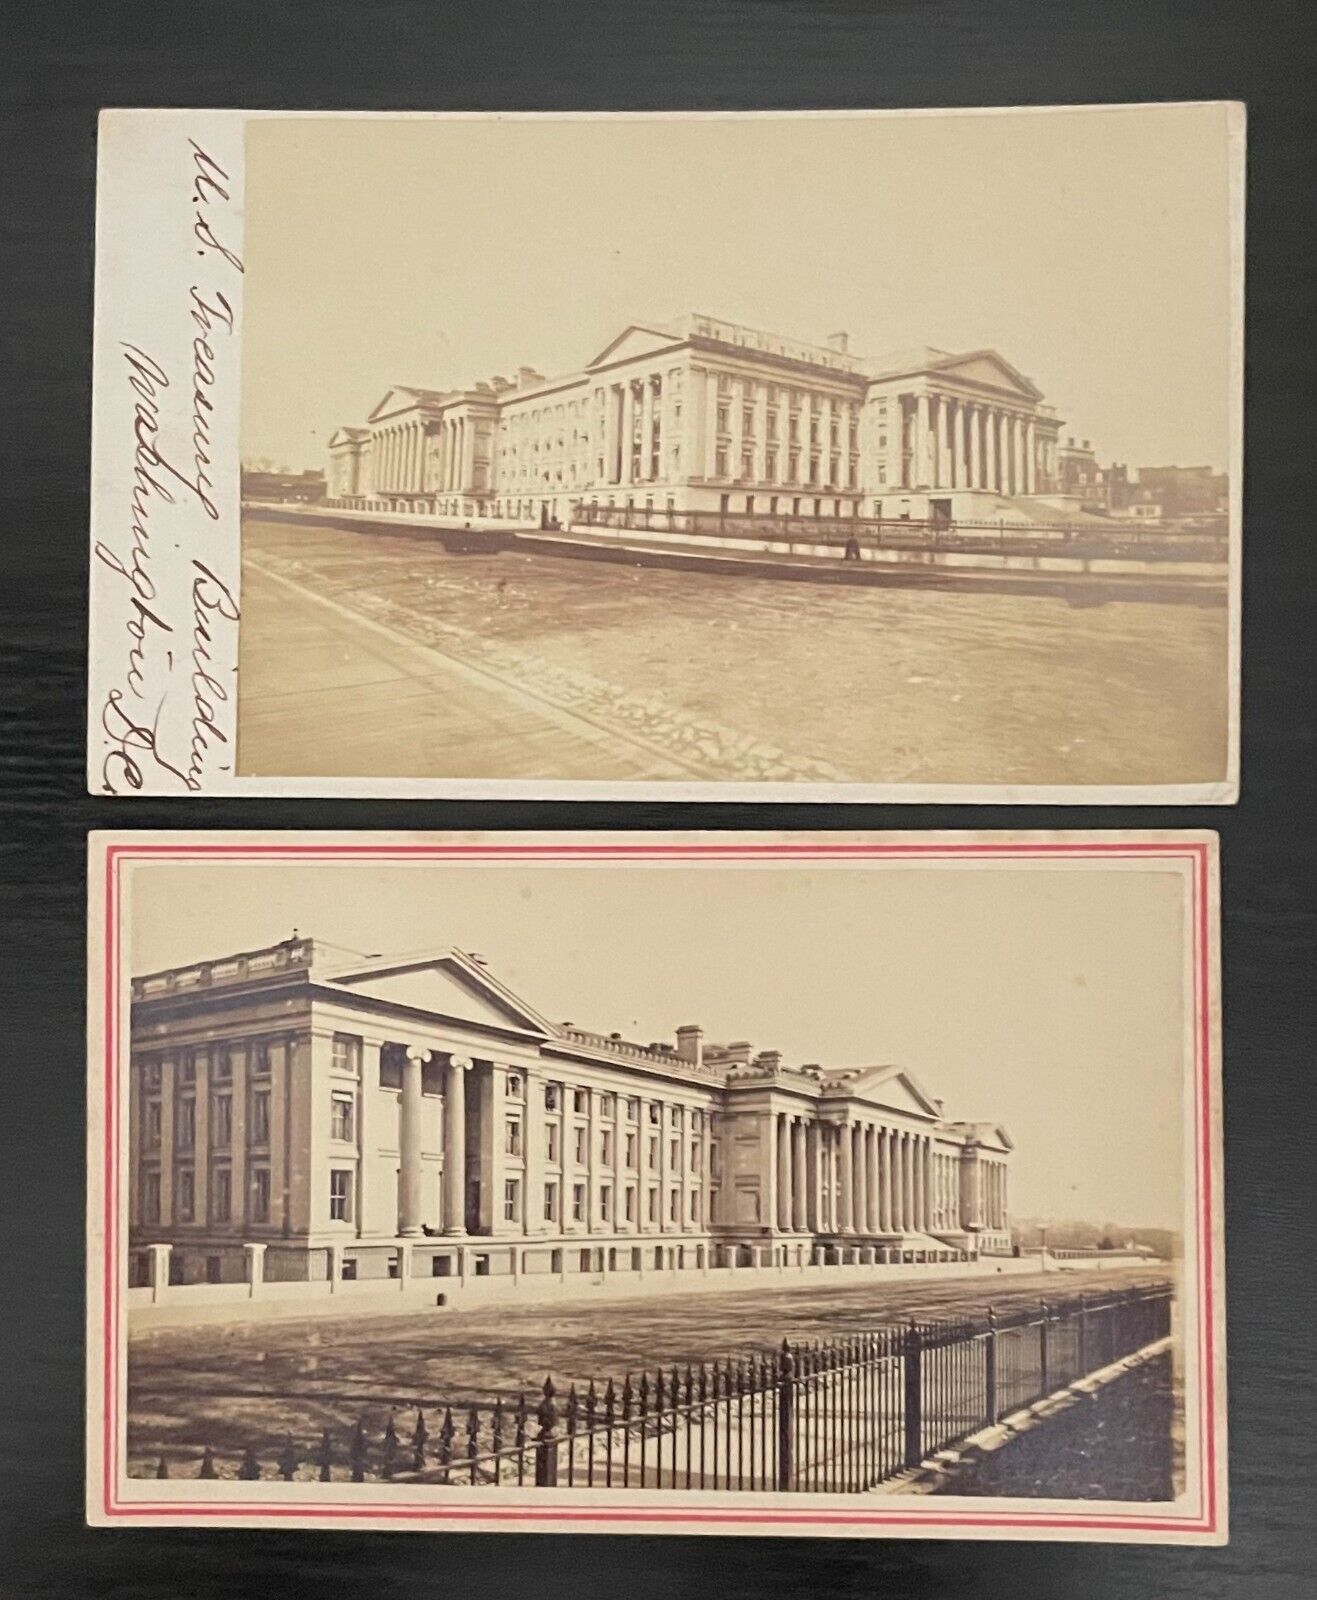 U.S. TREASURY DEPT BLDG. WASHINGTON D.C. -TWO DIFFERENT VIEWS - 1860s CDV PHOTOS